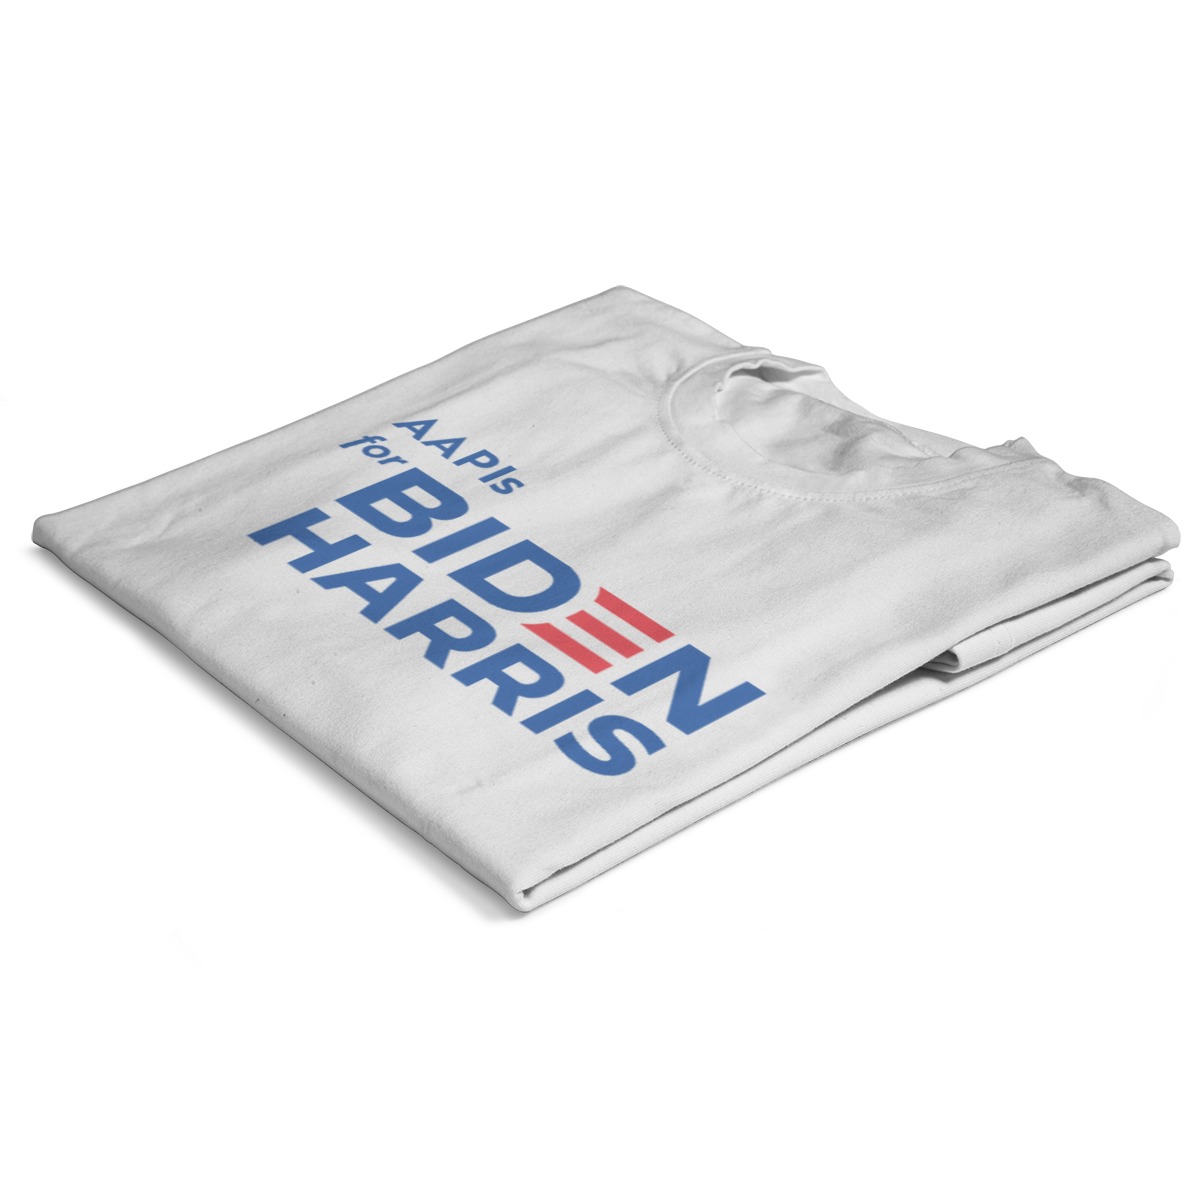 atinfor Biden Harris 2020 White Men's T Shirt Novelty Tops Bitumen Bike Life Tees Clothes Cotton Printed T-Shirt Plus Size